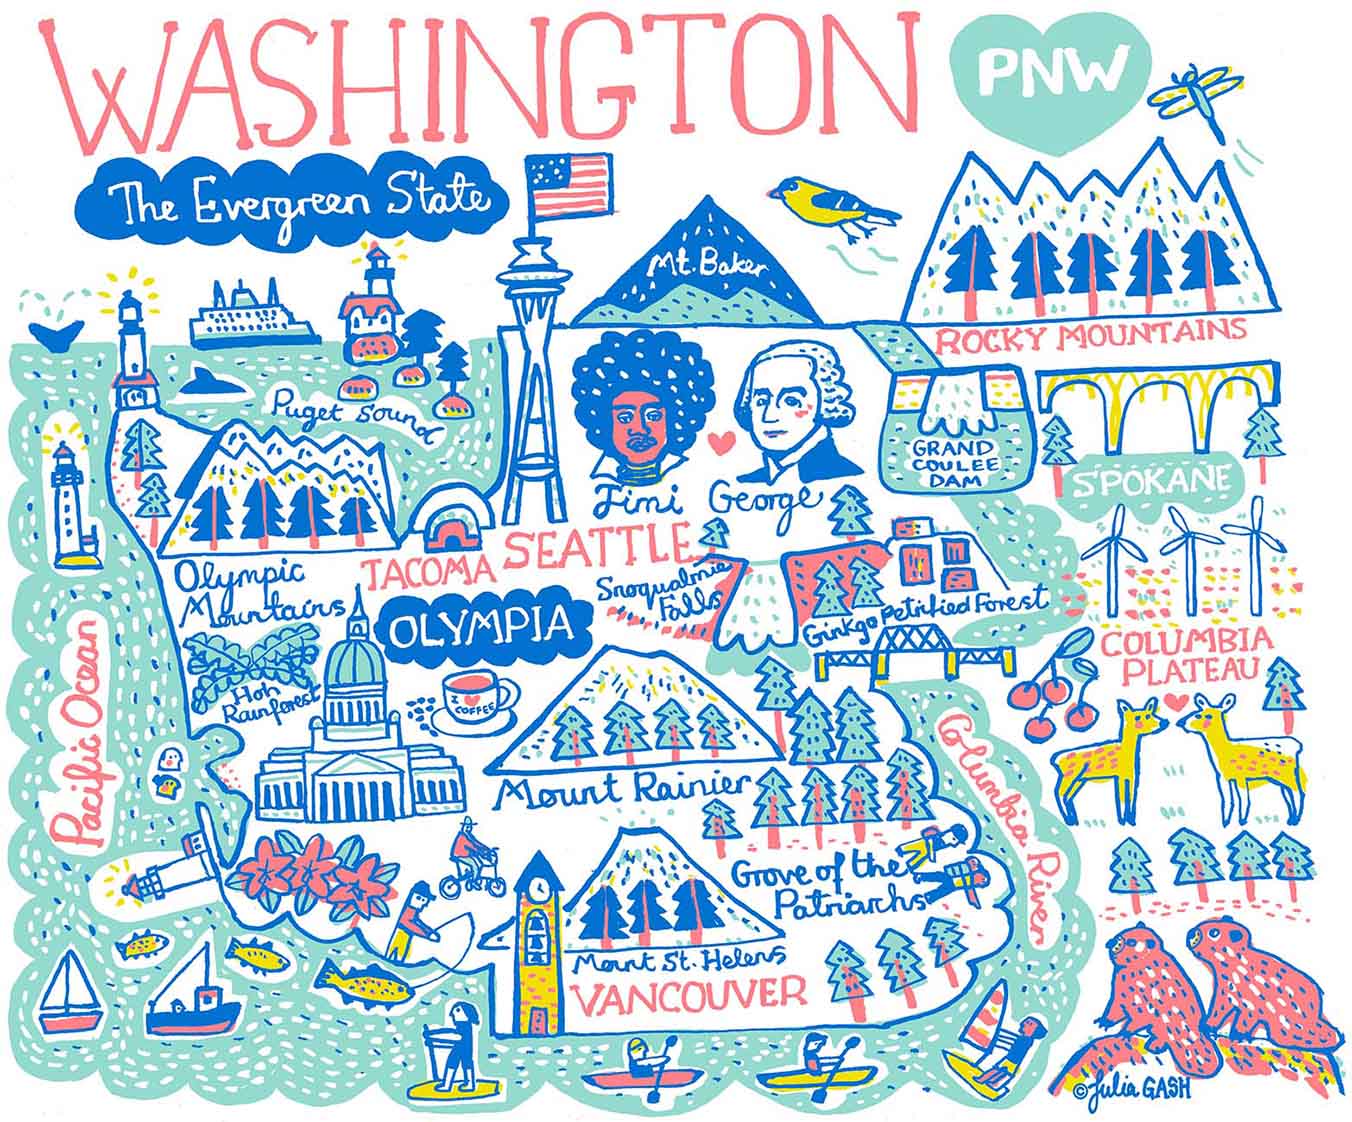 Washington Postcard - Julia Gash